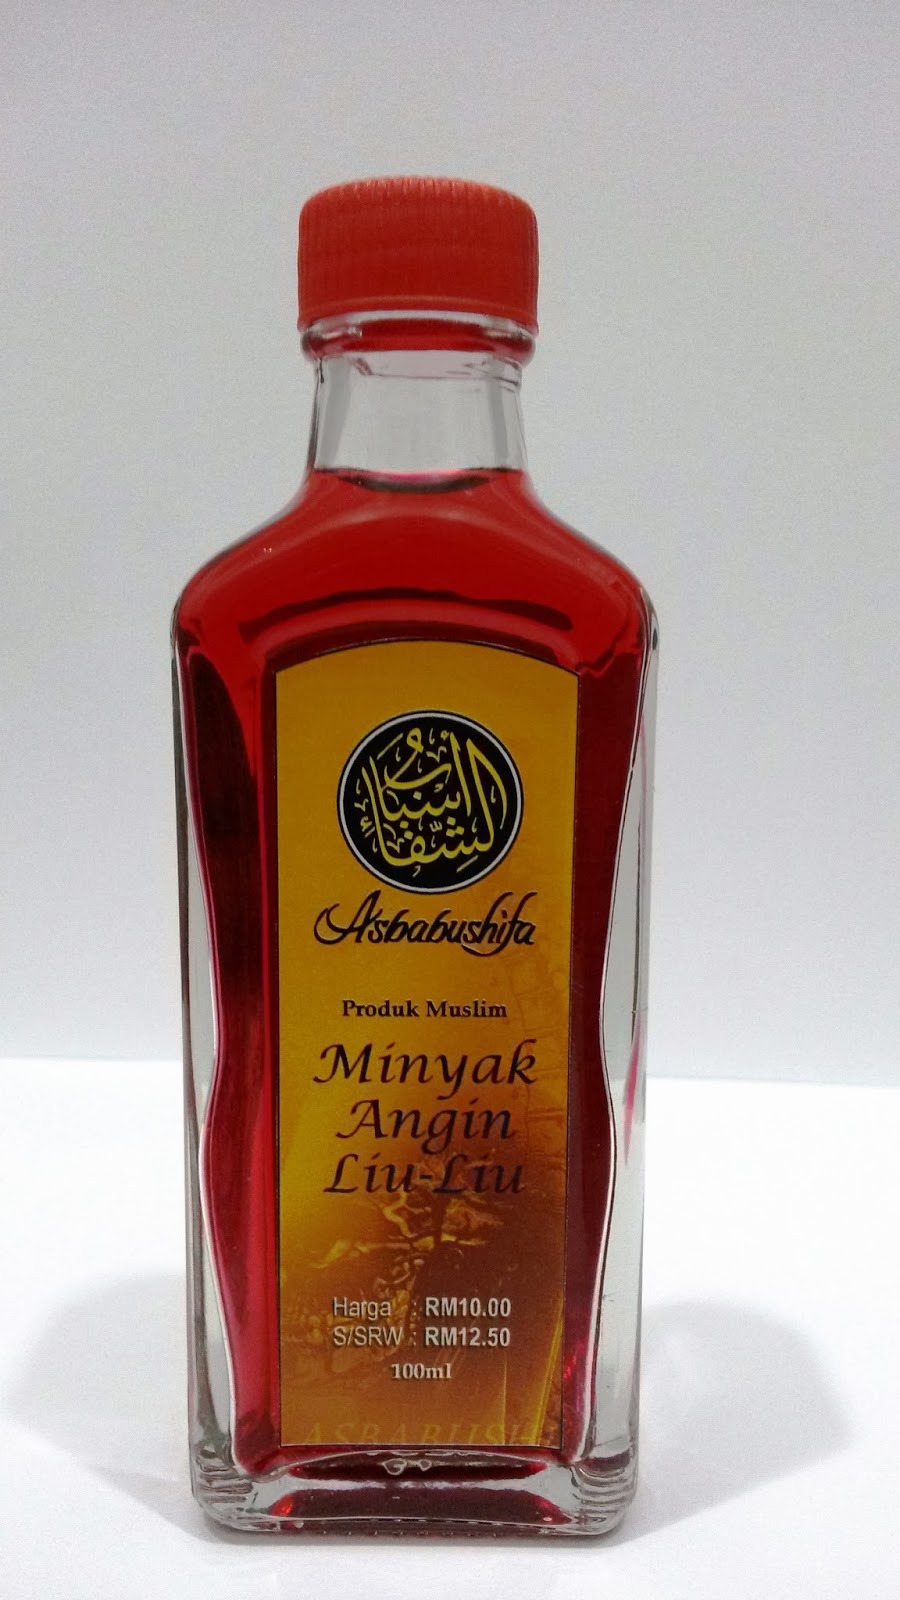 Perubatan Produk Muslim & Urutan Tradisional: Ubatan 